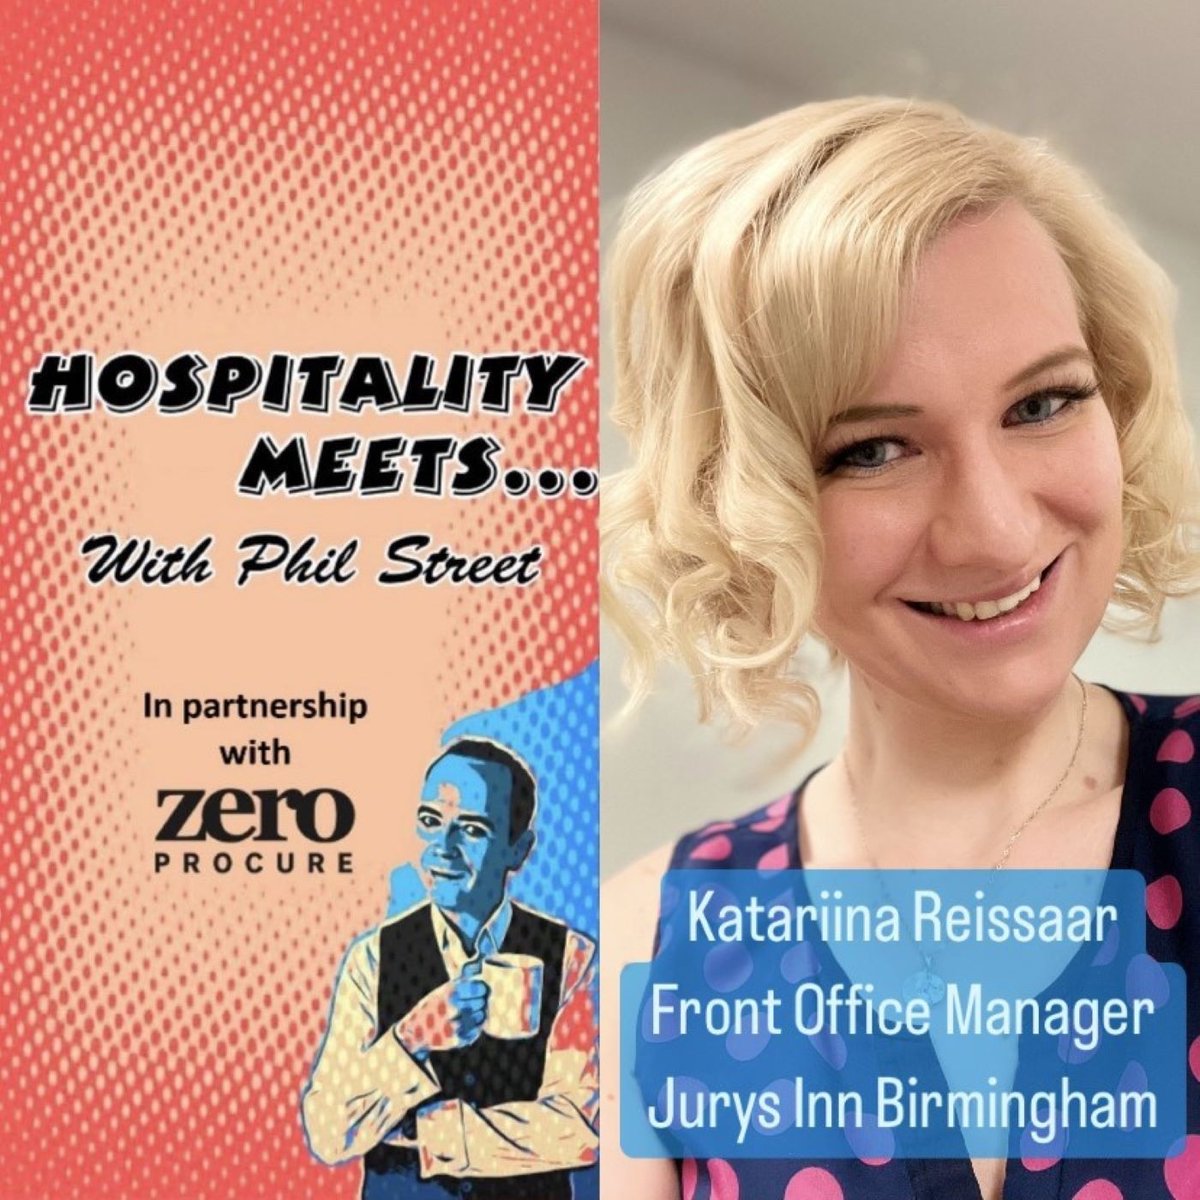 Ep113 is Live - In partnership with @ProcureZero

I chat to @KatzR4 at @JurysInnsHotels in Birmingham

🎧️👉🏼linktr.ee/Hospmeetspod

#risingstar #talent #hospitalitytalent #frontoffice #hotelreception #hotels #futuretalent #hospitalityindustry #hospitalitypodcast #zeroprocure